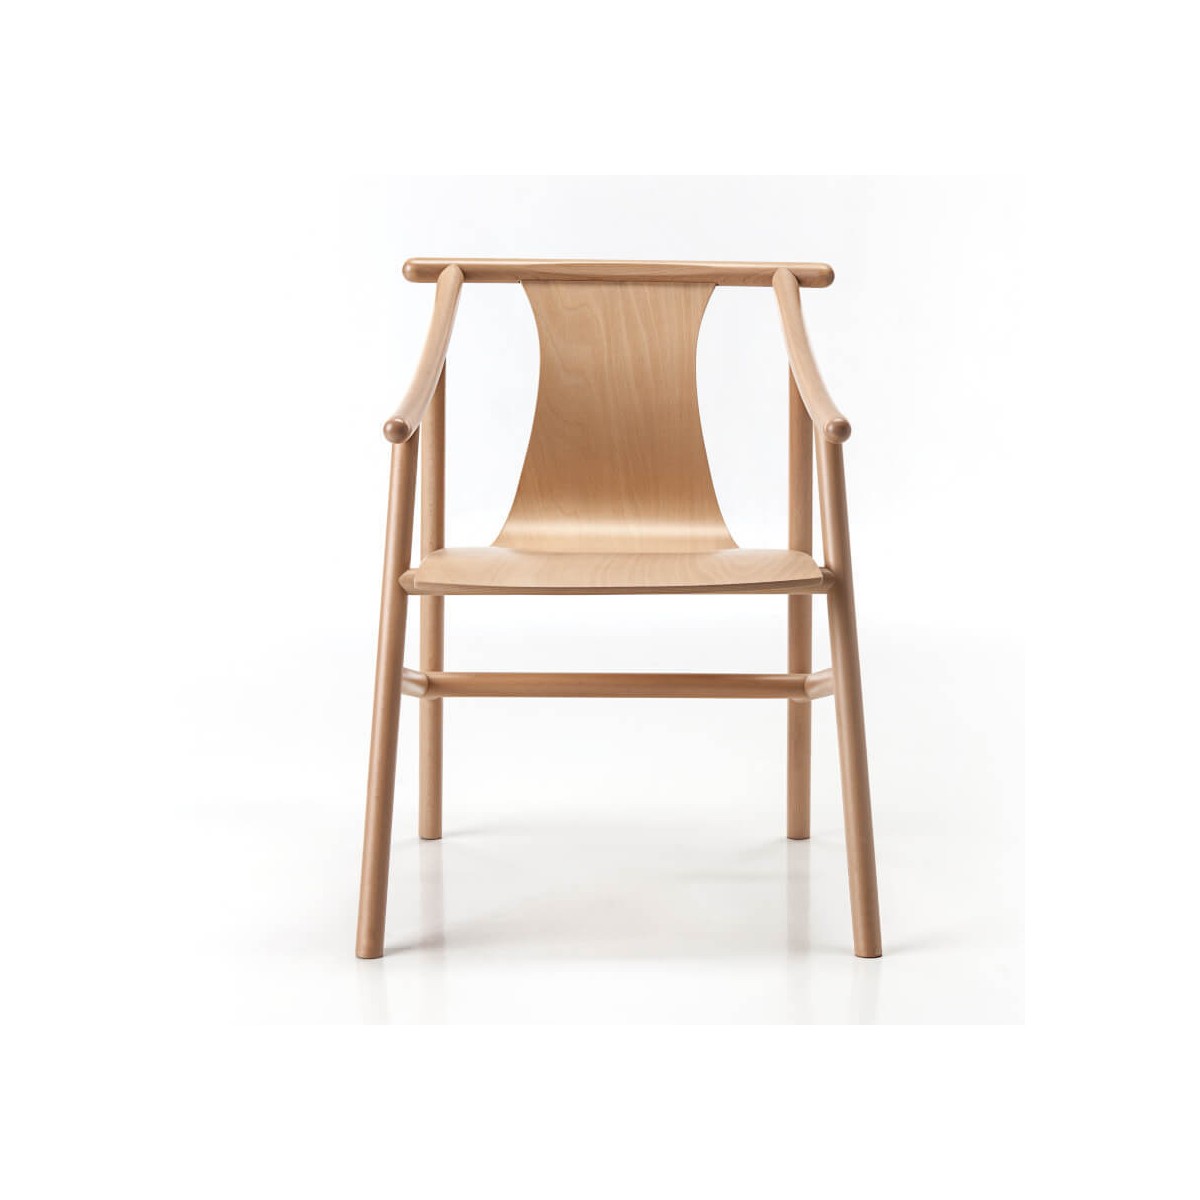 MAGISTRETTI 03 01 chair - Wiener GTV Design